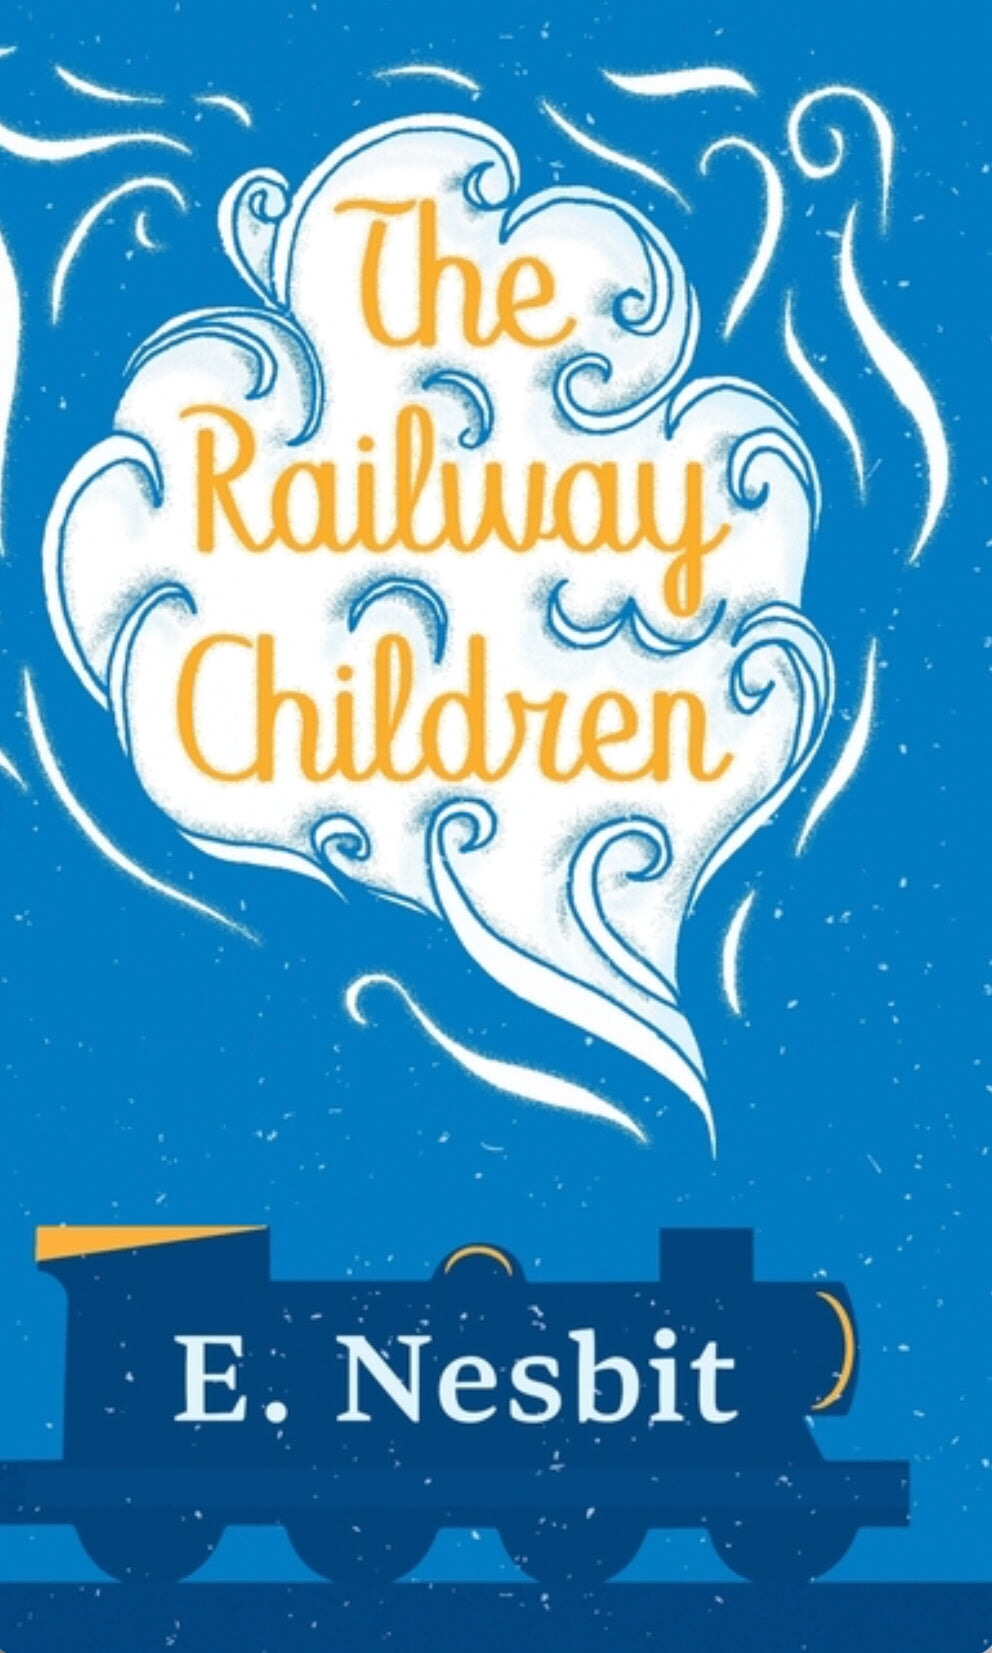 The Railway Children by E. Nesbit | Middle Grade Fiction Middle Grade Books - Alder & Alouette